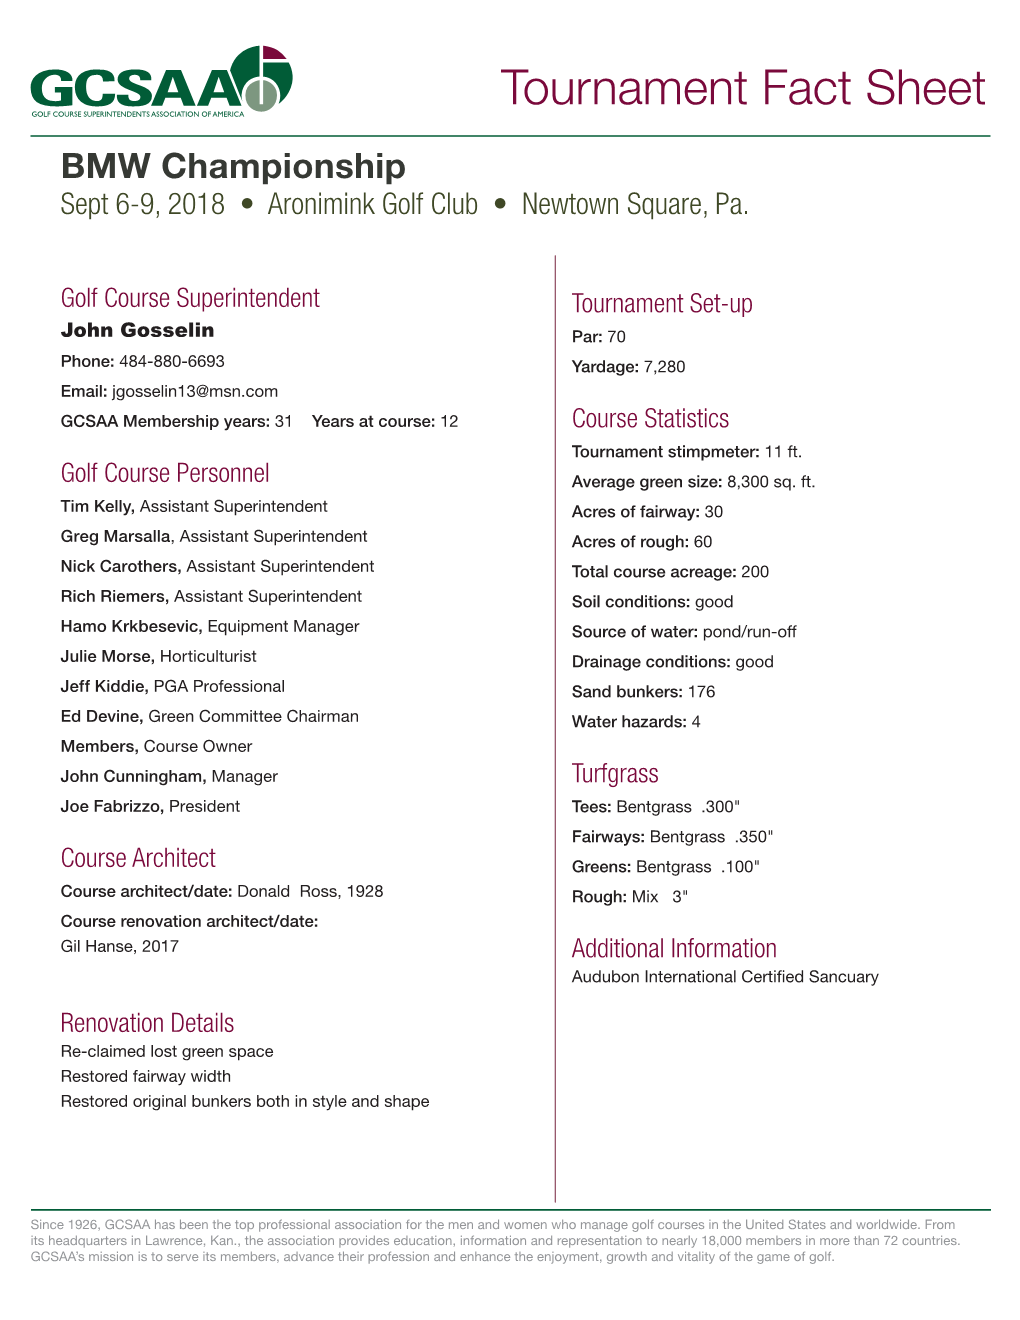 BMW Championship Sept 6-9, 2018 • Aronimink Golf Club • Newtown Square, Pa